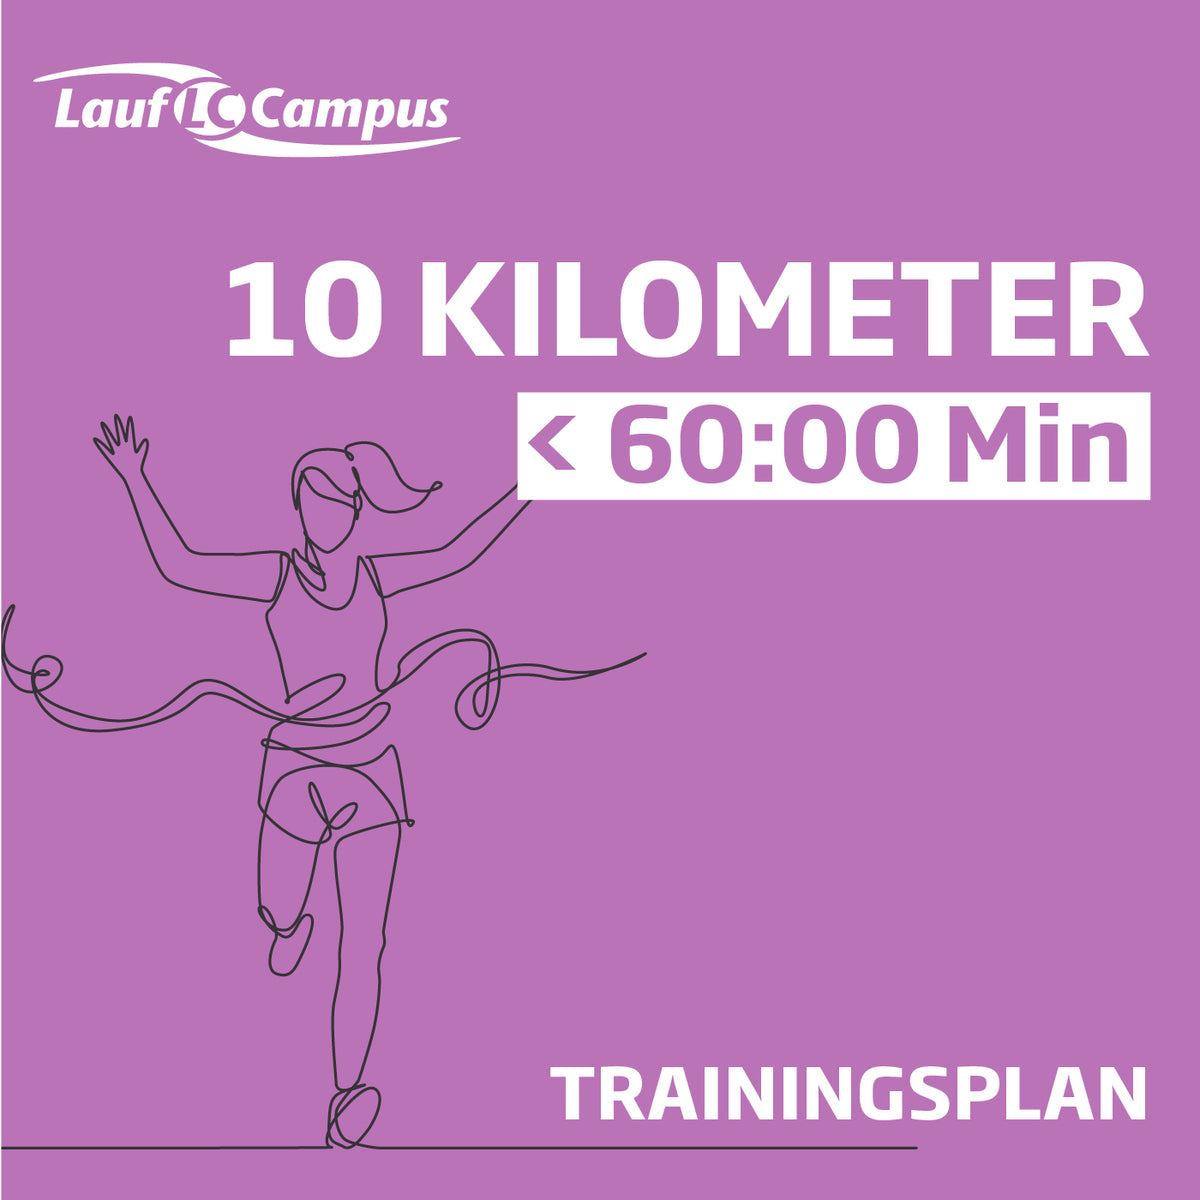 Trainingsplan 10 km unter 60 Minuten